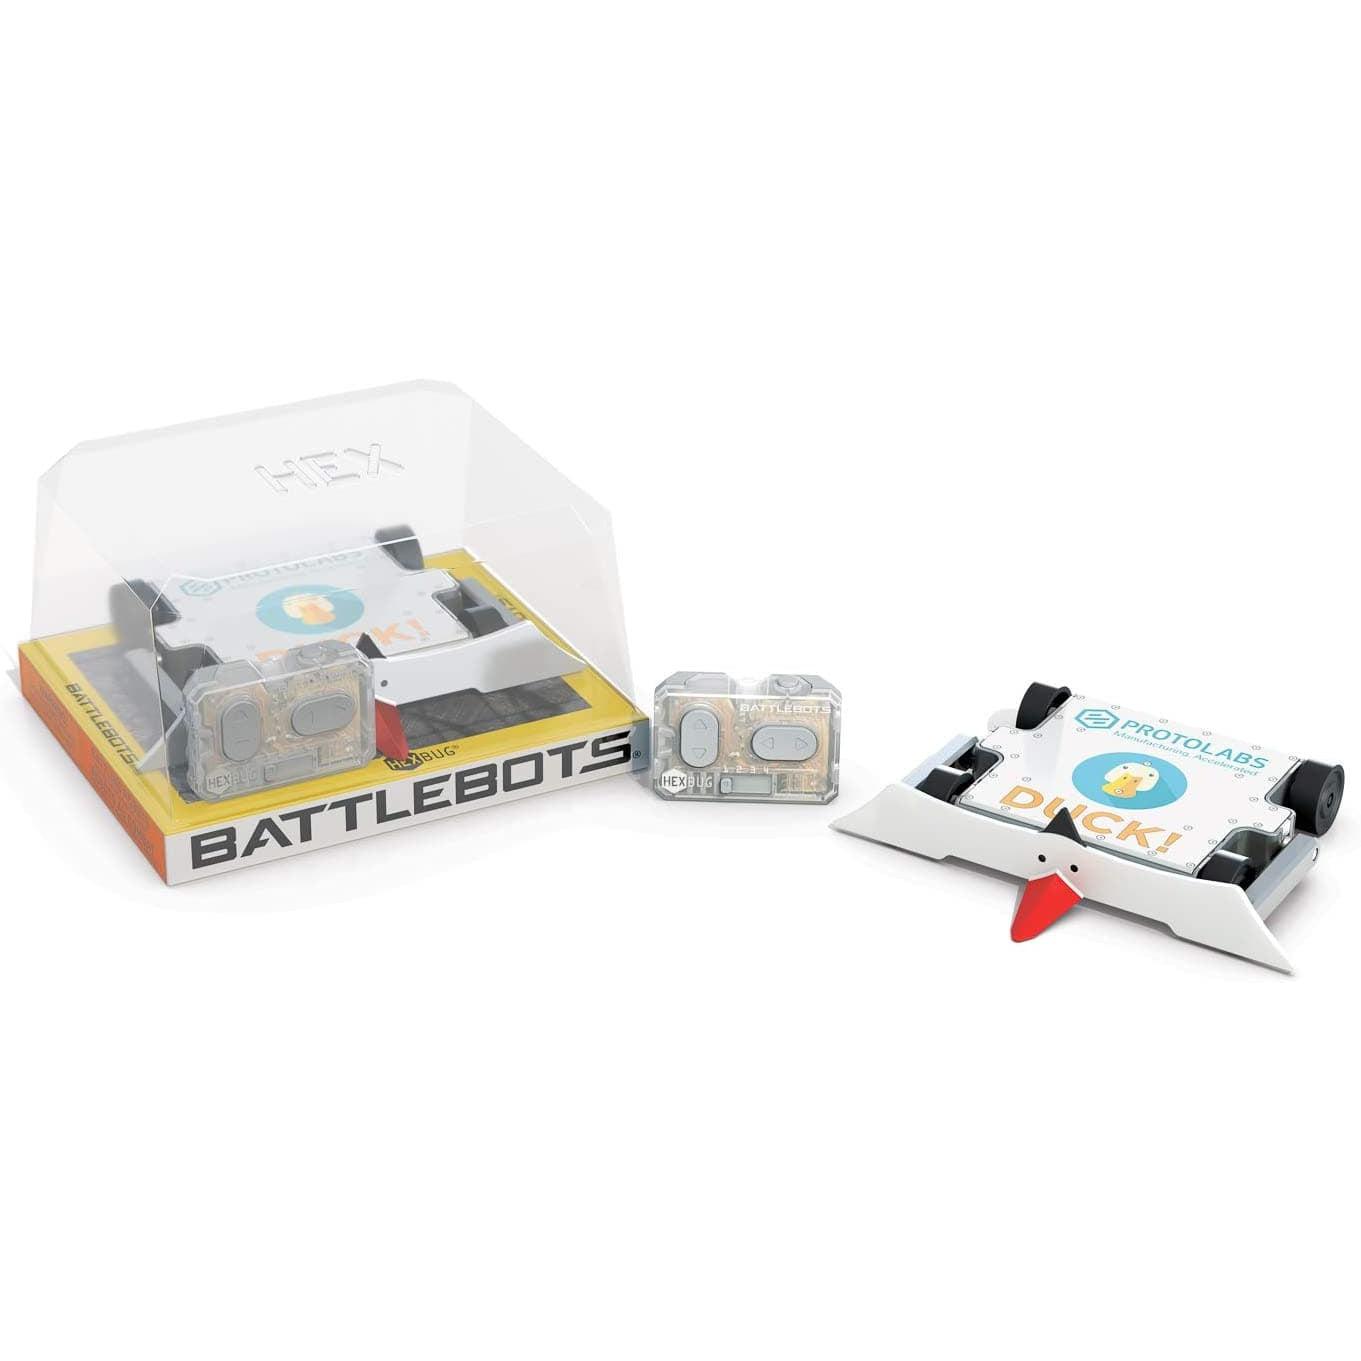 Spin Master-Hexbug Battlebots Rivals V5 - Duck vs. Rotator-6069028-Legacy Toys